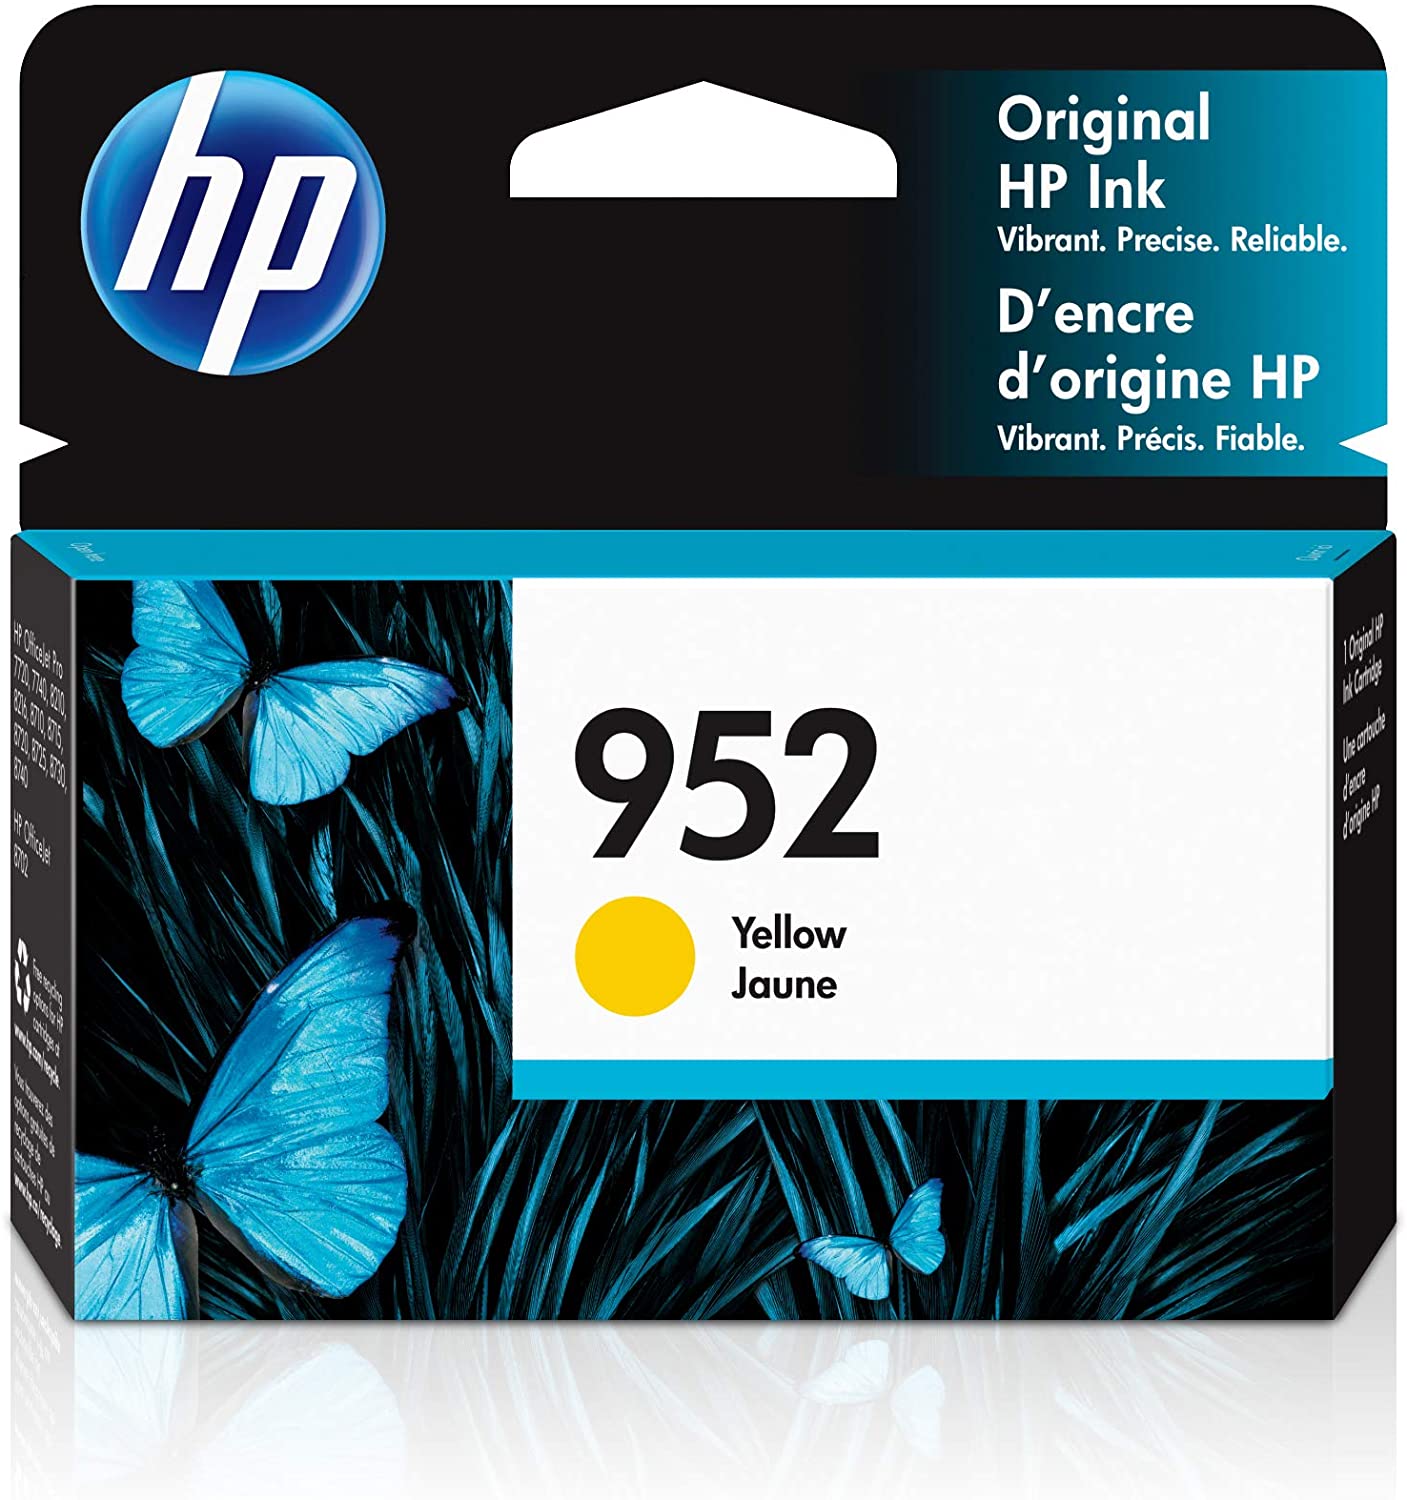 HP 952 Yellow Ink | MegaByte Computers